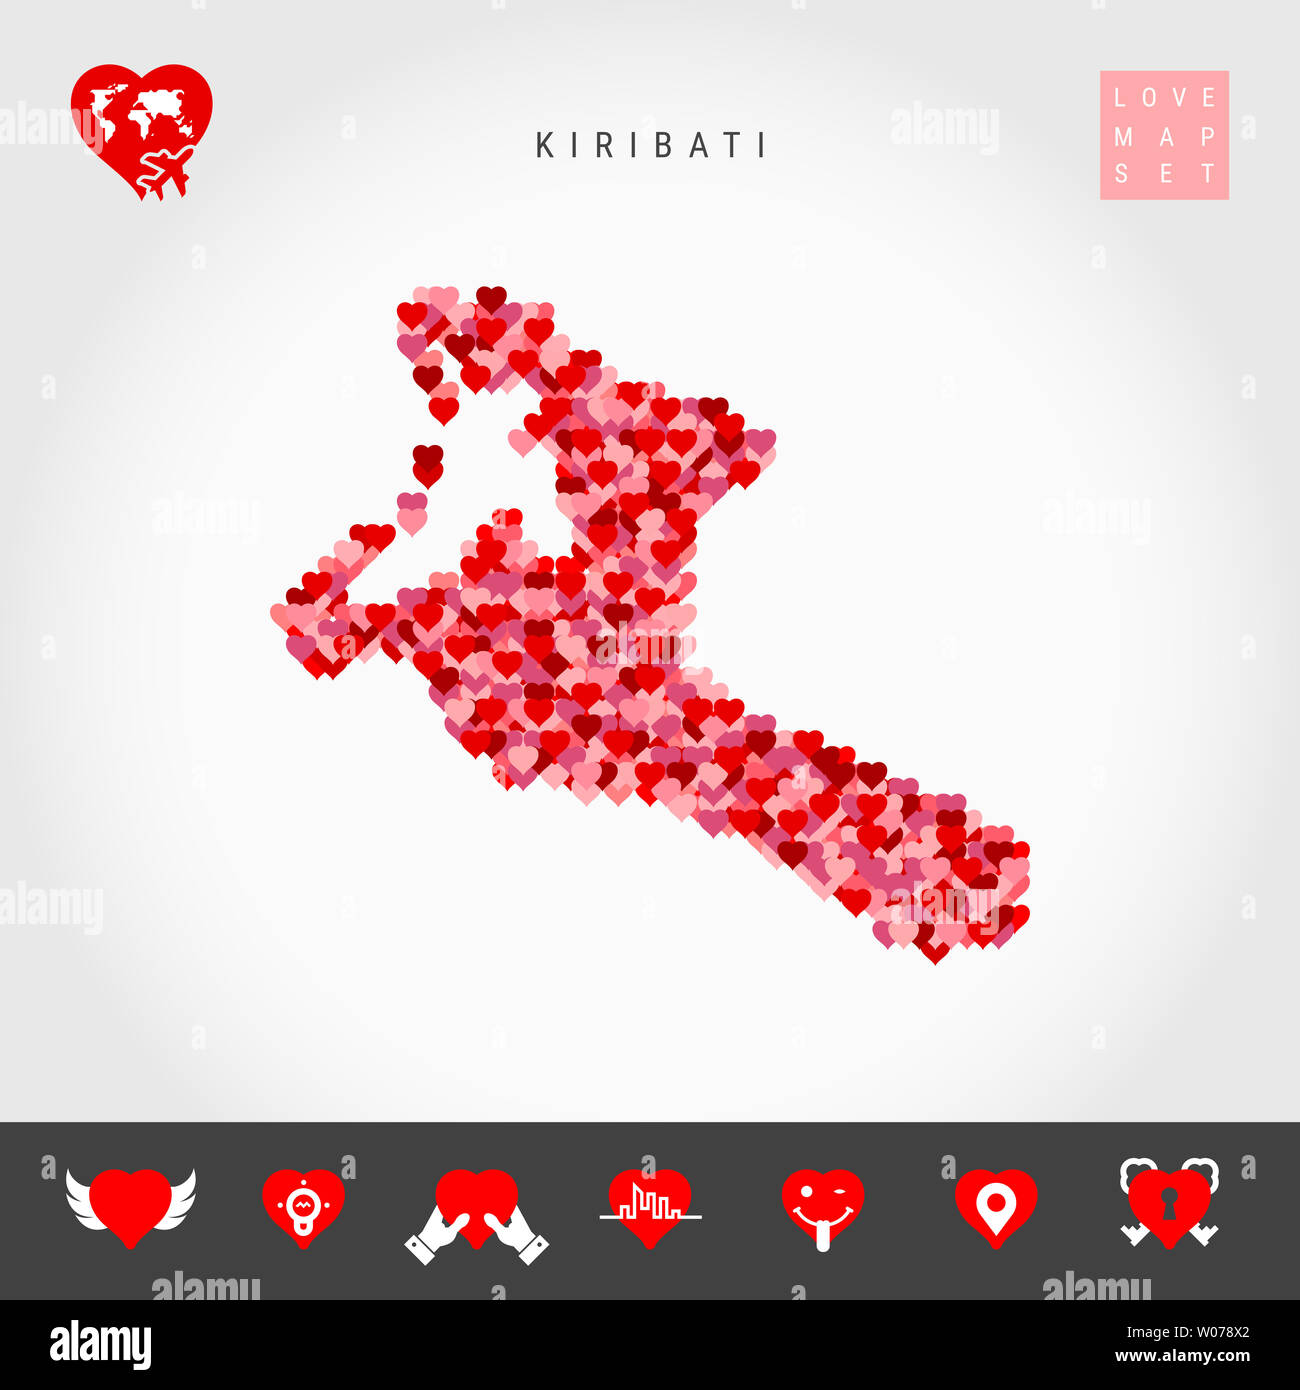 I Love Kiribati. Red and Pink Hearts Pattern Map of Kiribati Isolated on Grey Background. Love Icon Set. Stock Photo